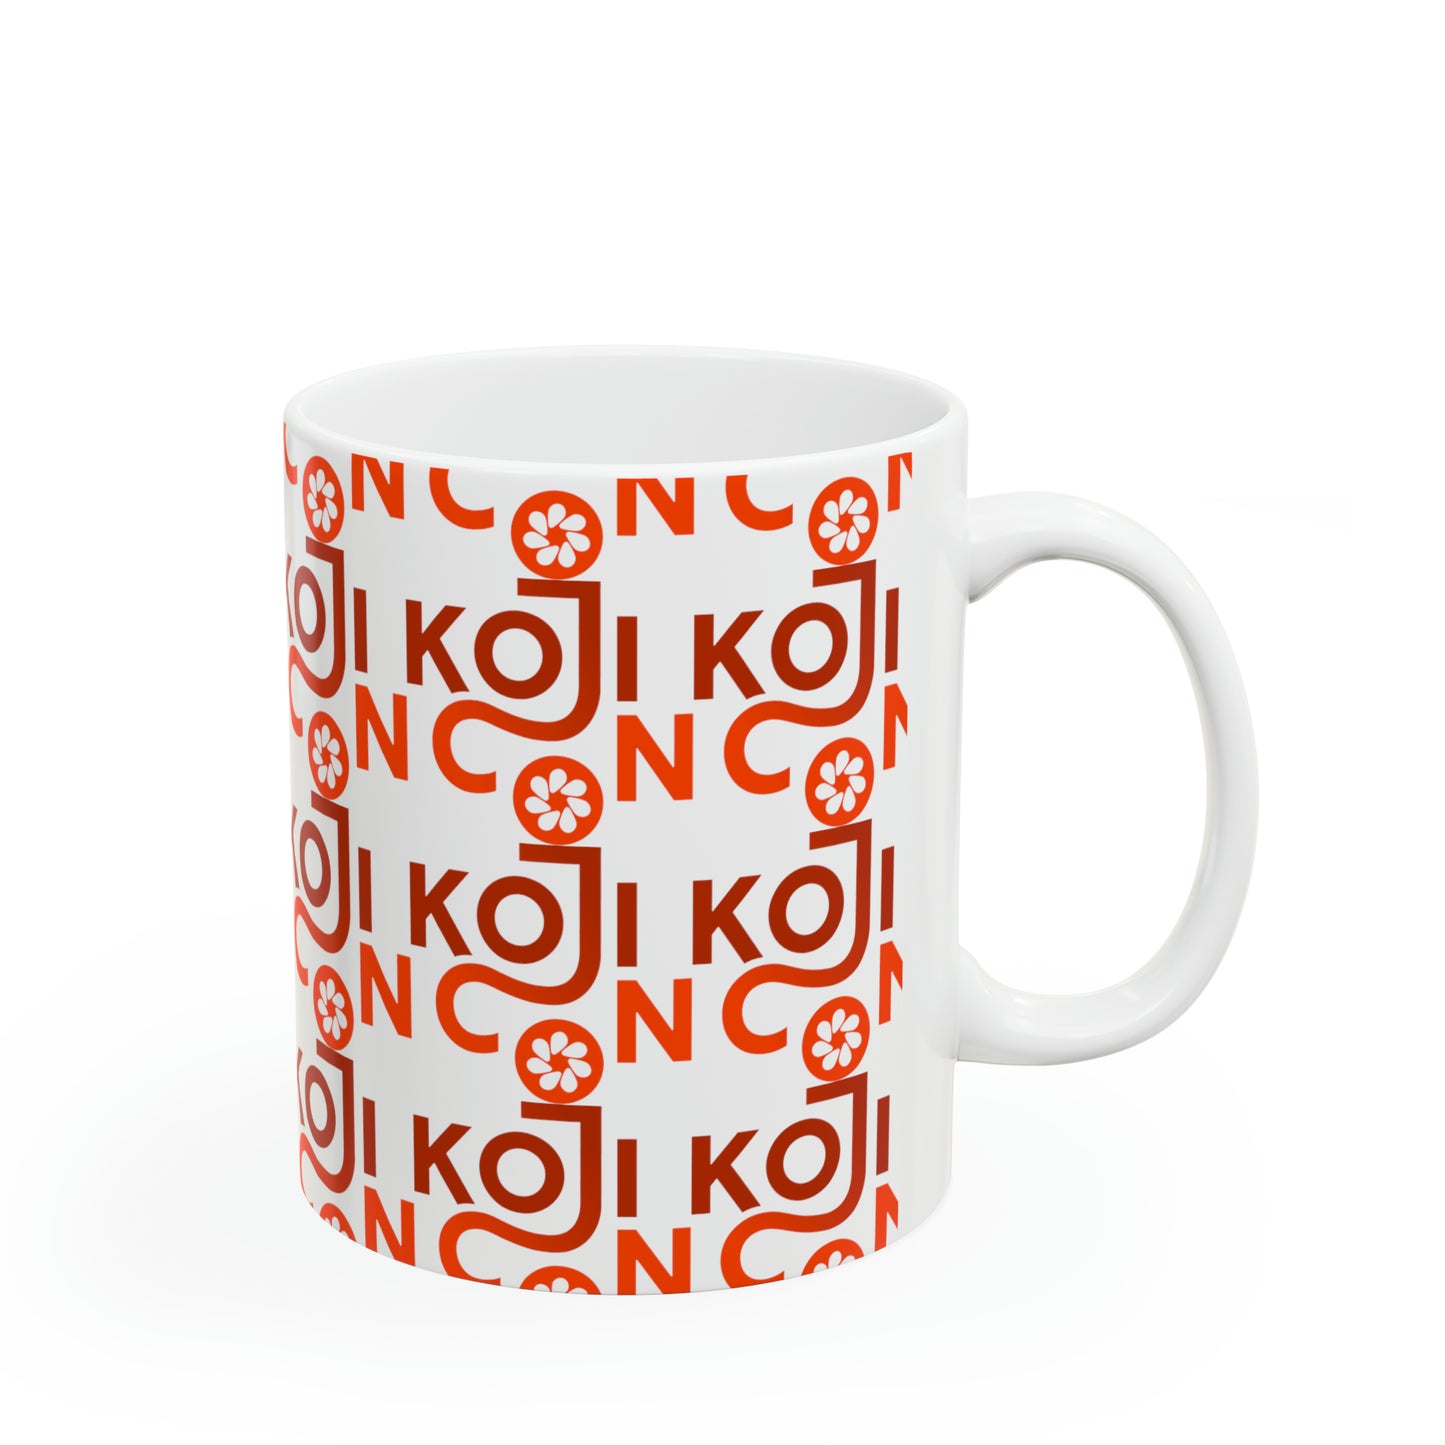 KOJICON Ceramic Mug 11oz